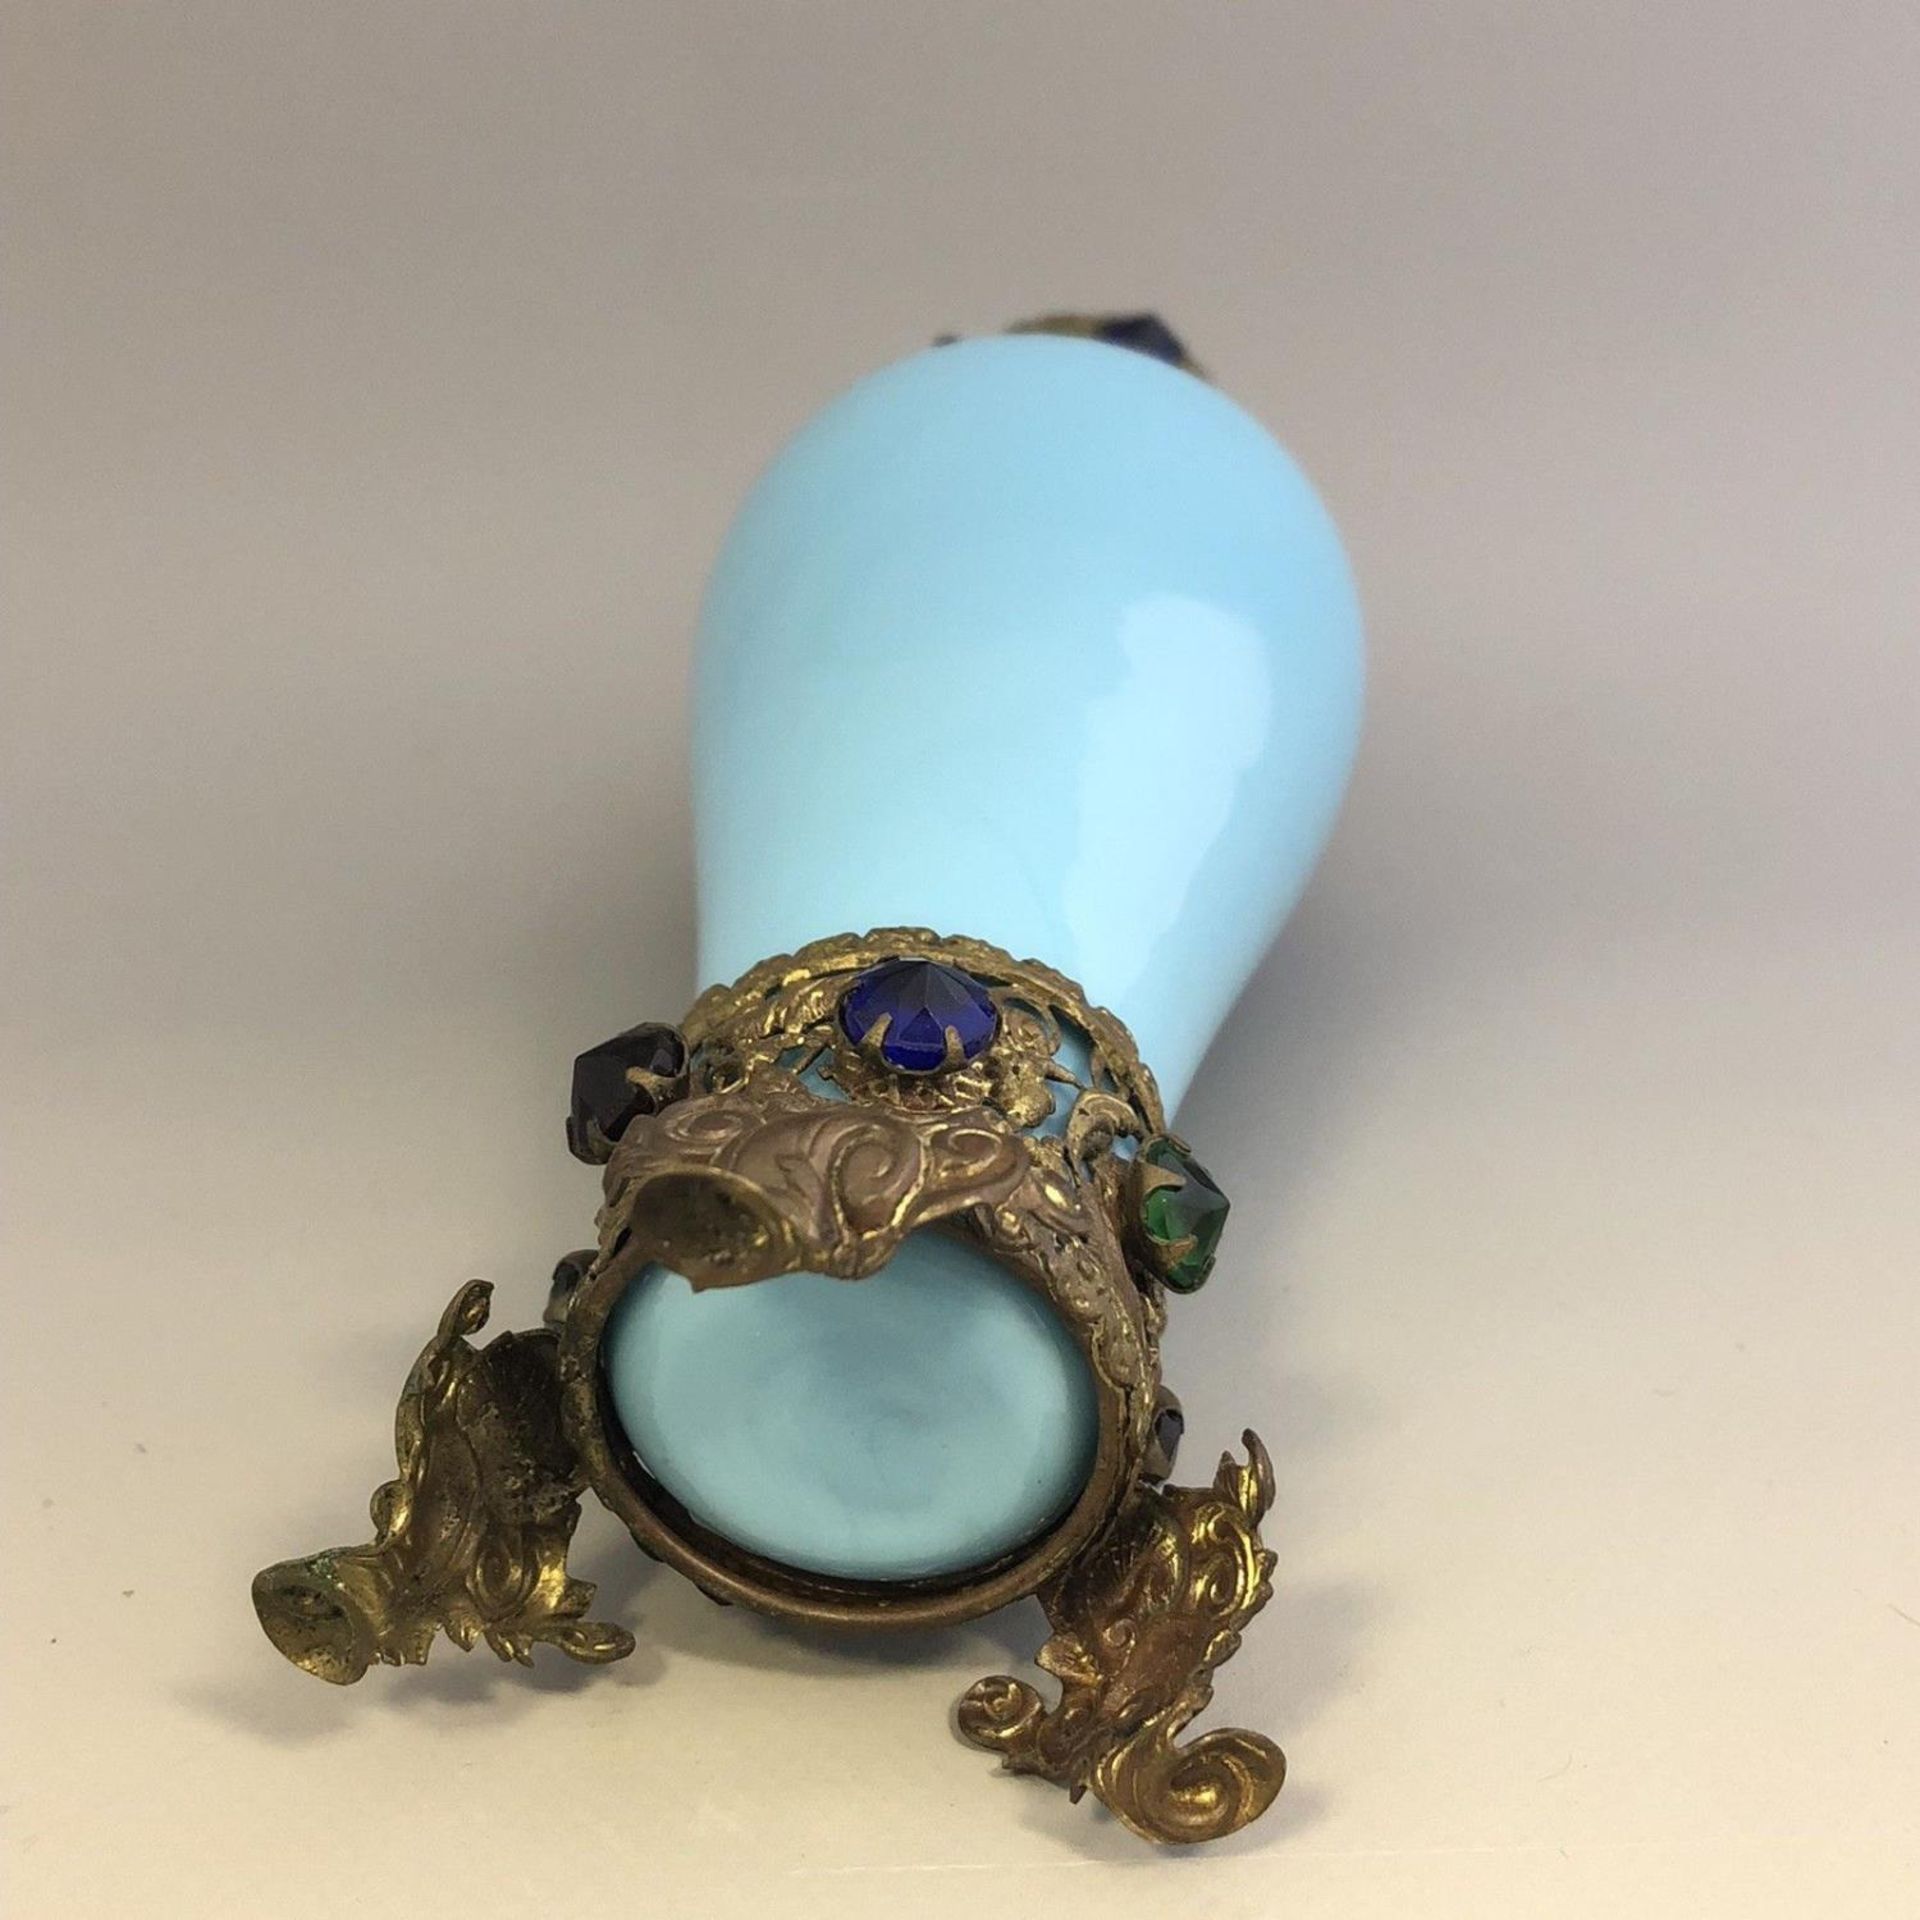 French blue opaline glass vase/perfume bottle gilt metal jewelled mounts - 19thC - Image 3 of 4